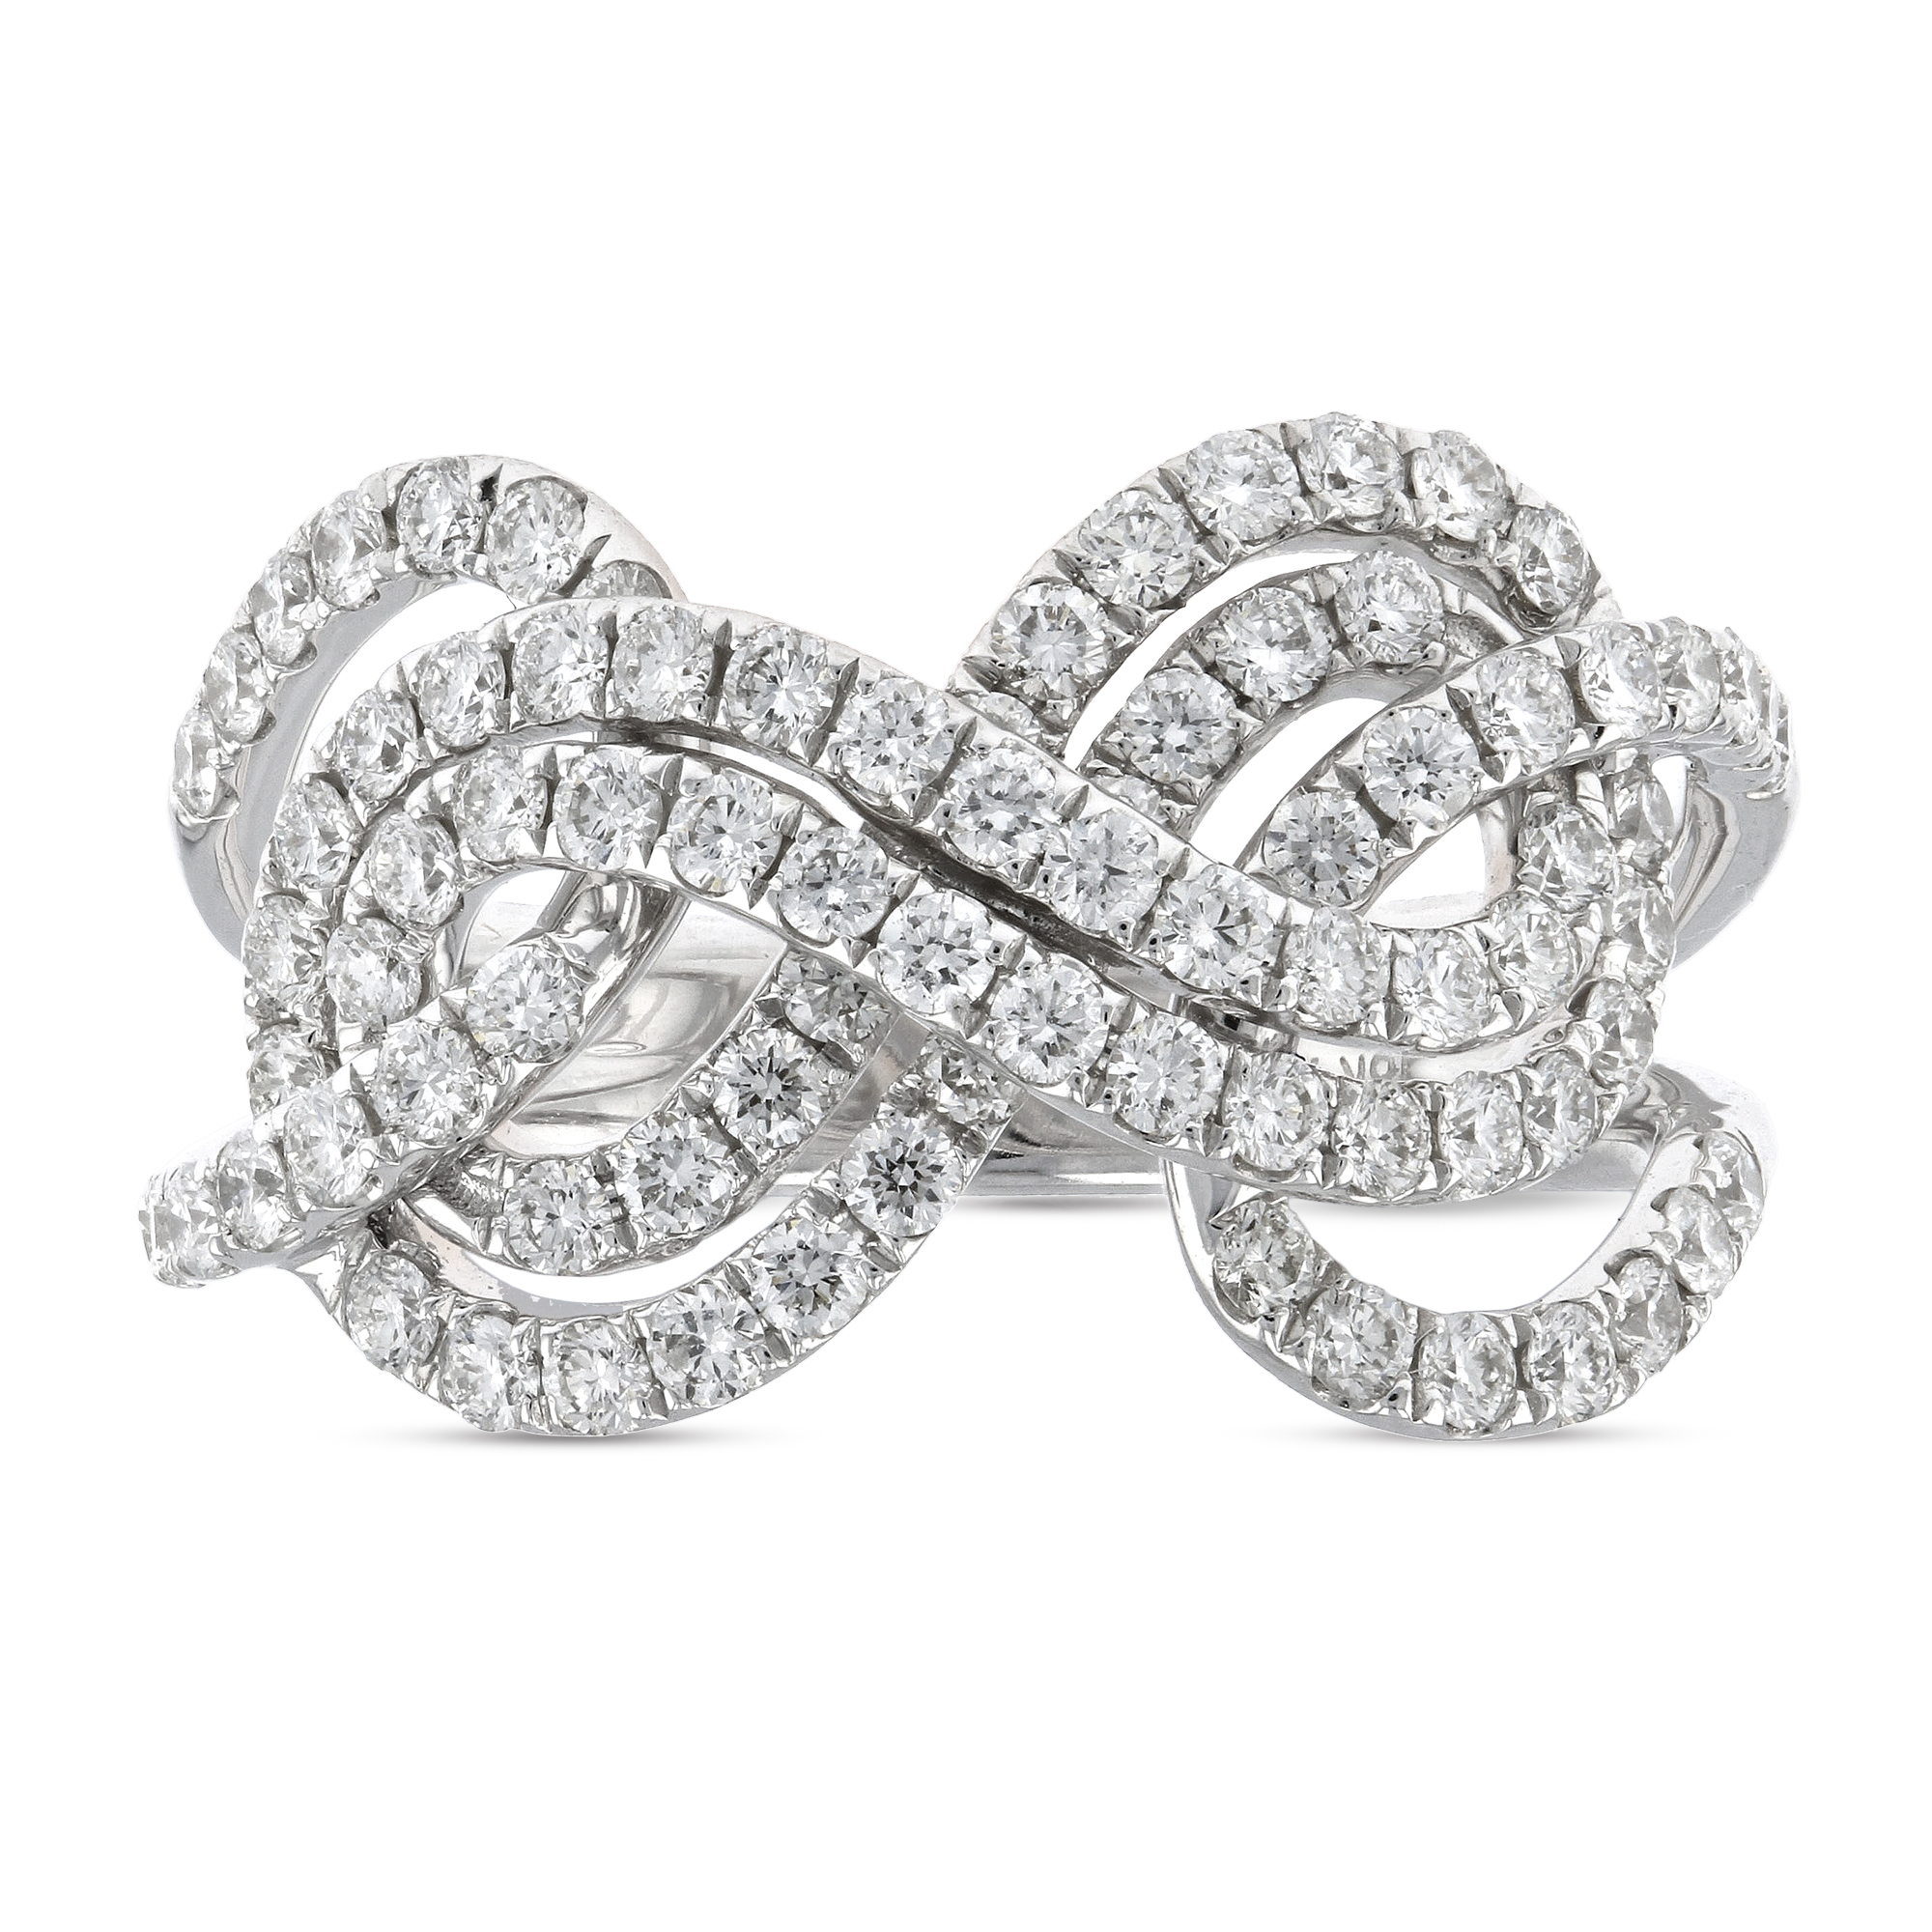 View 1.20ctw Diamond Fashion ring in 18k White Gold